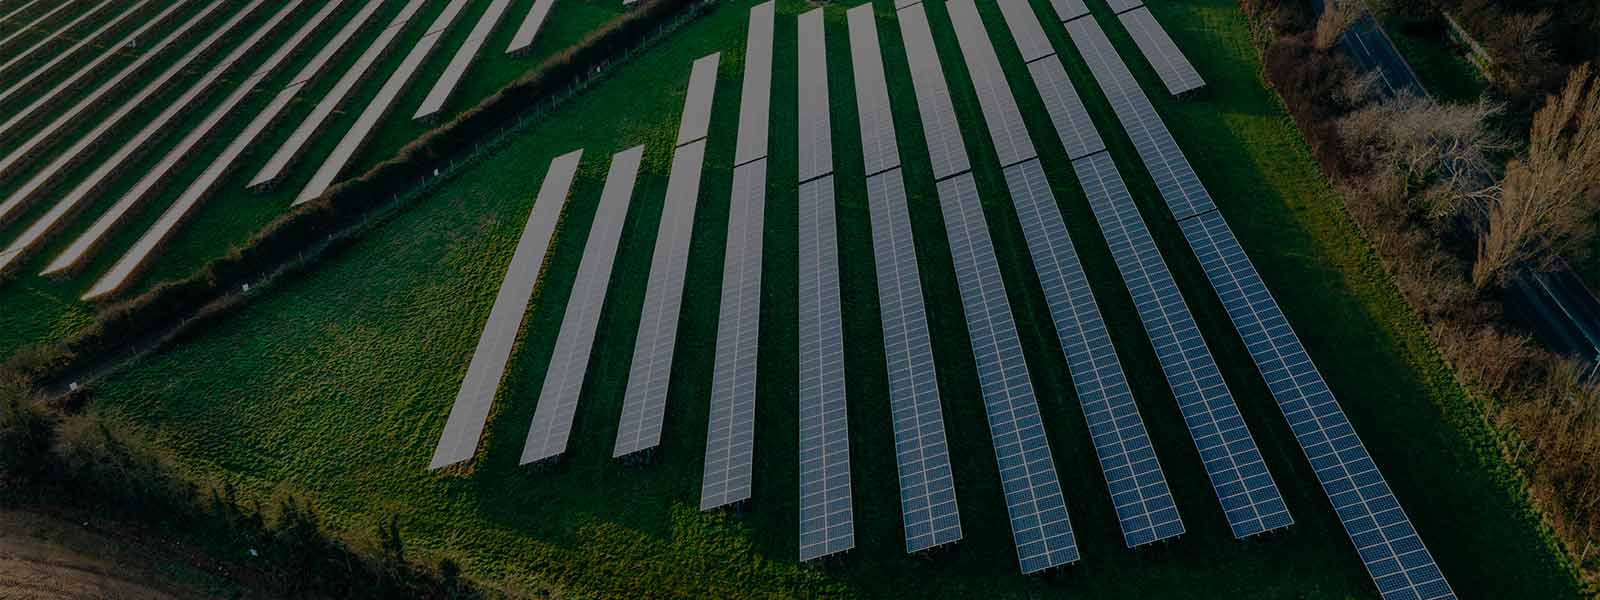 Vast rows of solar panels spread across lush green farmland